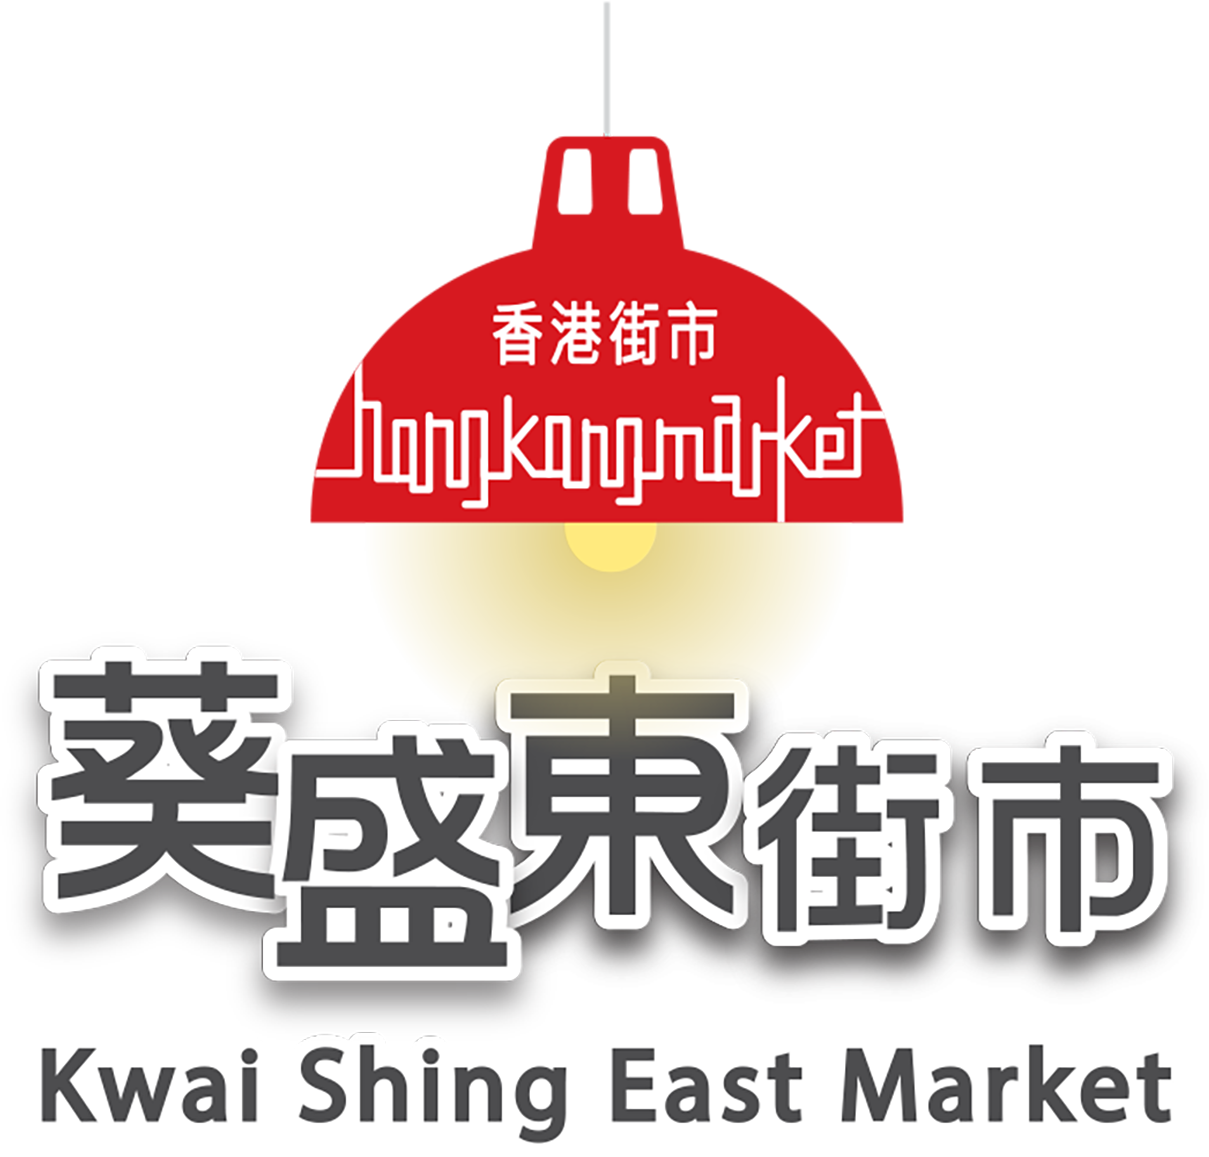 Kwai Shing East Market